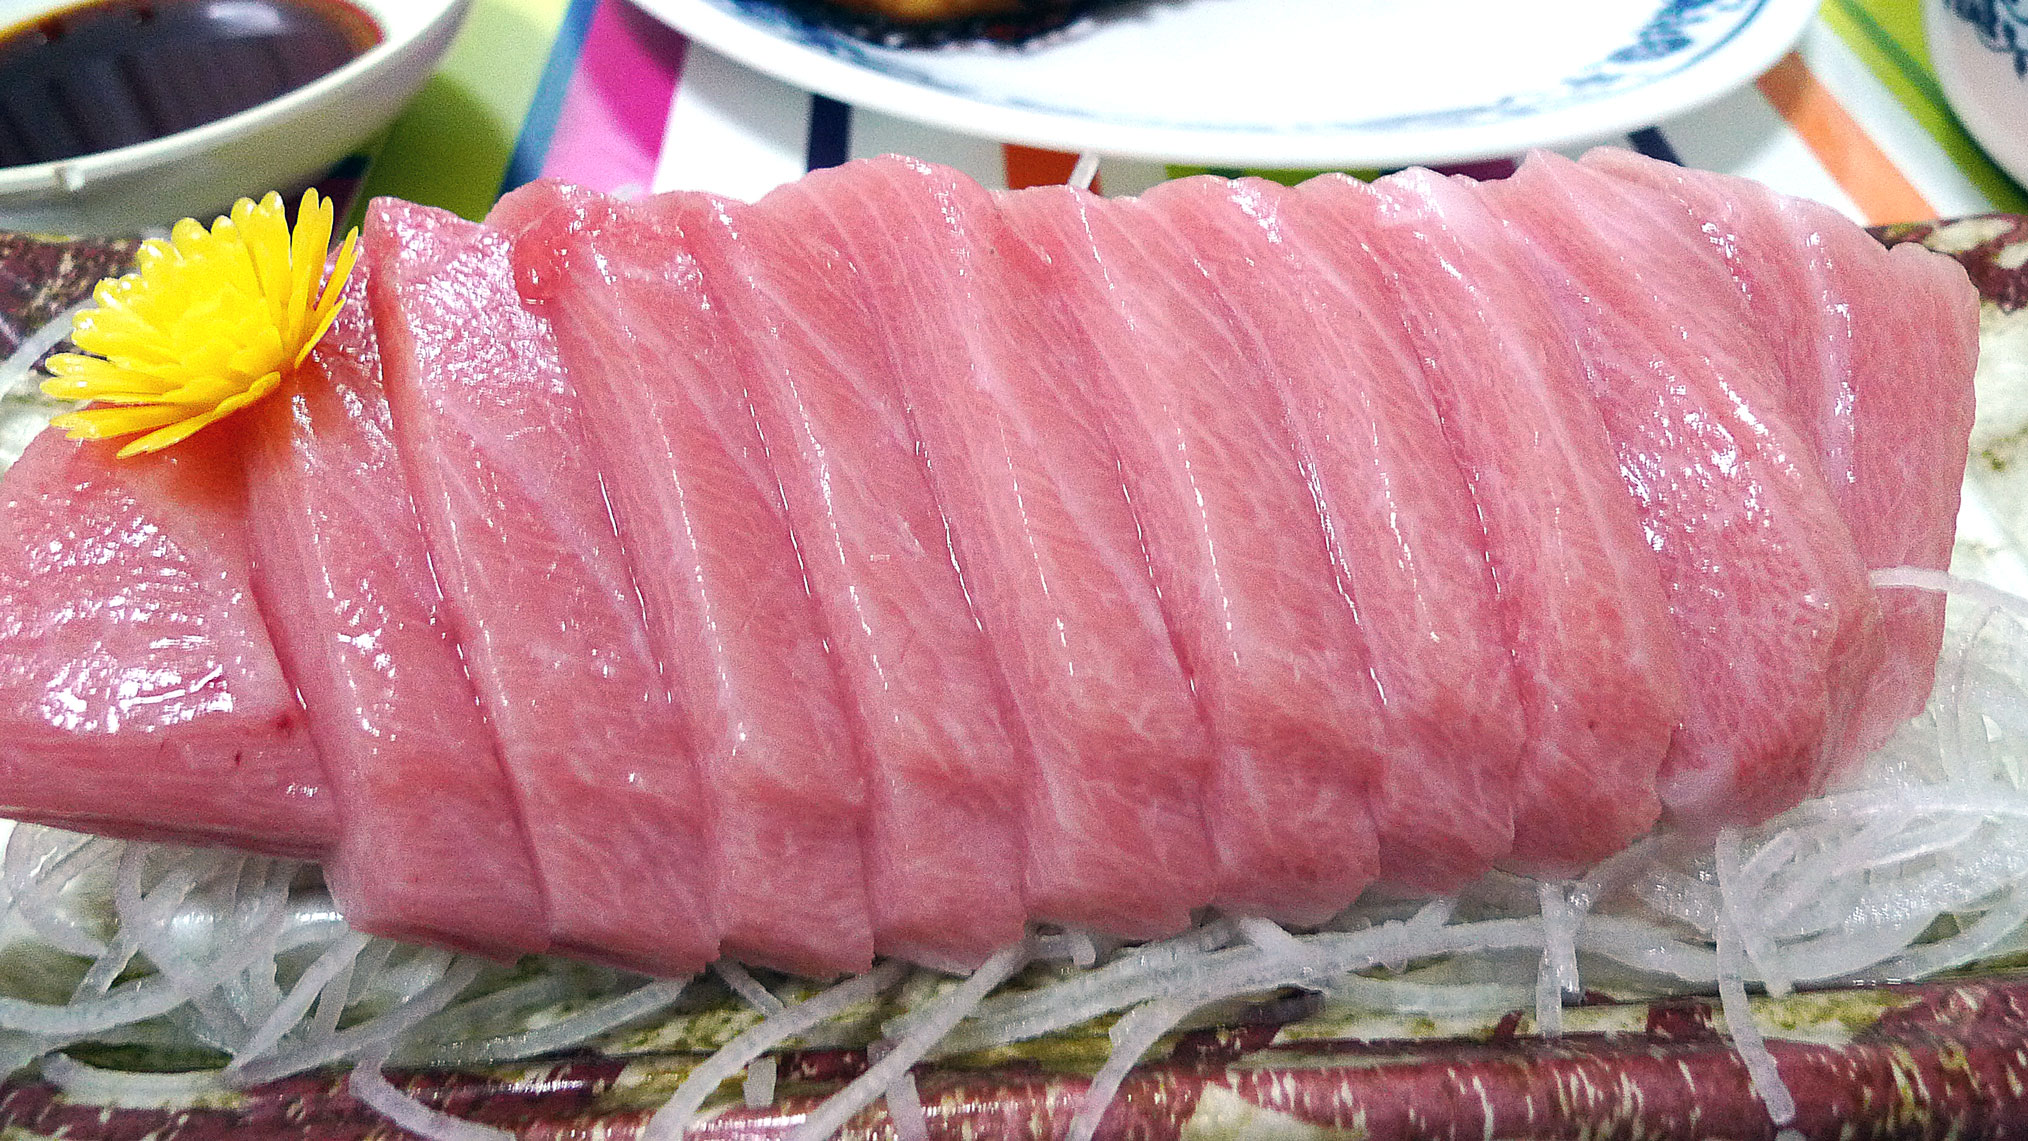 otoro-sashimi-mon-sashimi-bung-ca-ngu-thuong-pham-dai-khach